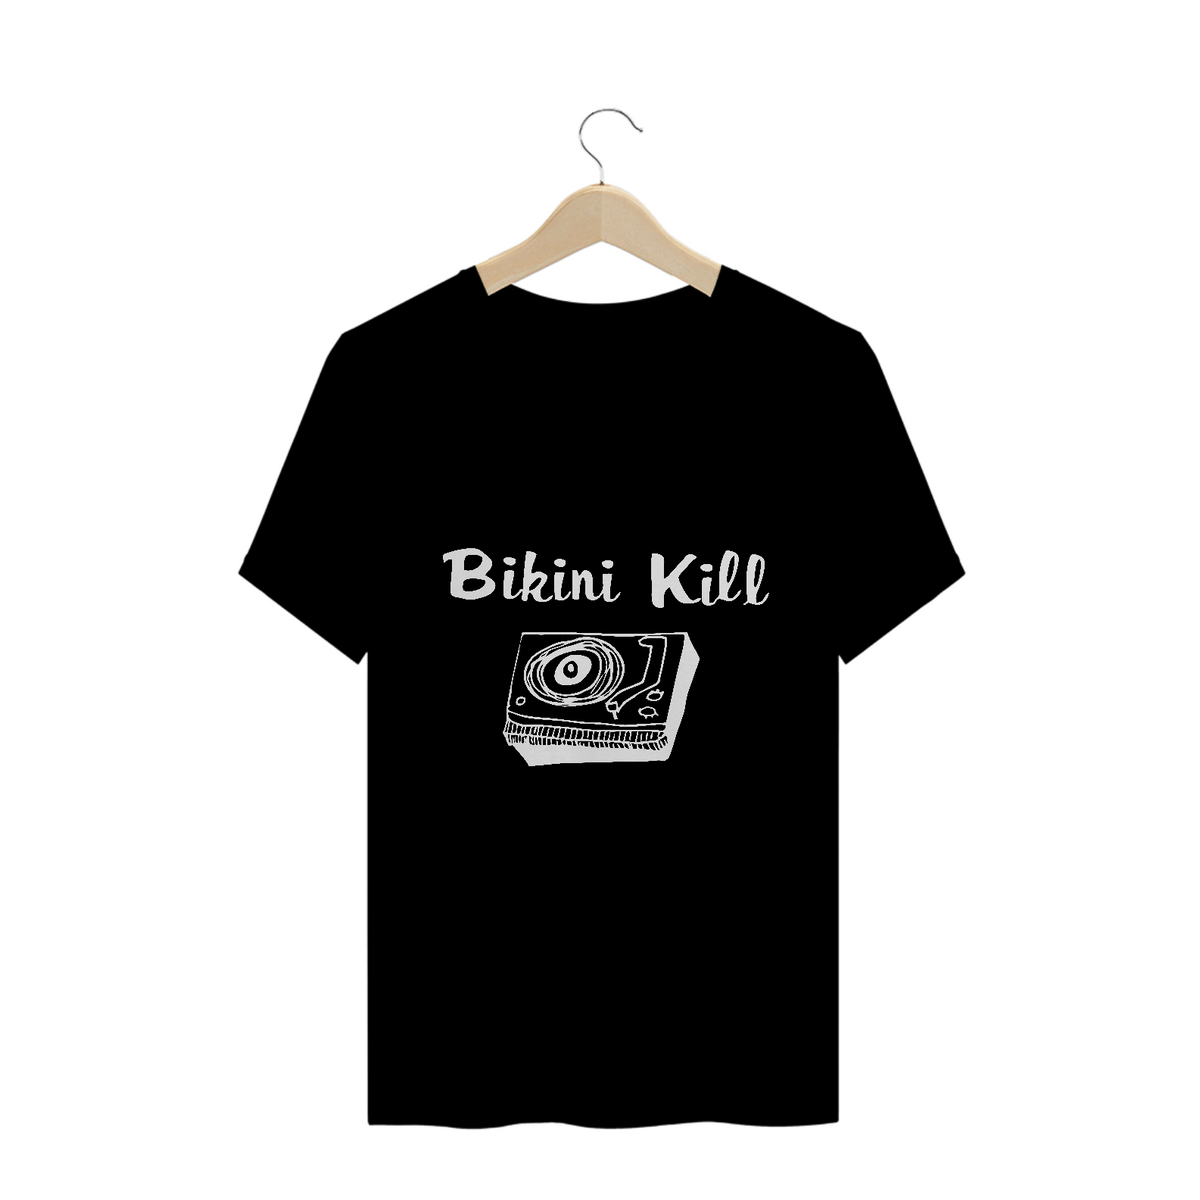 Nome do produto: Camisa Bikini Kill